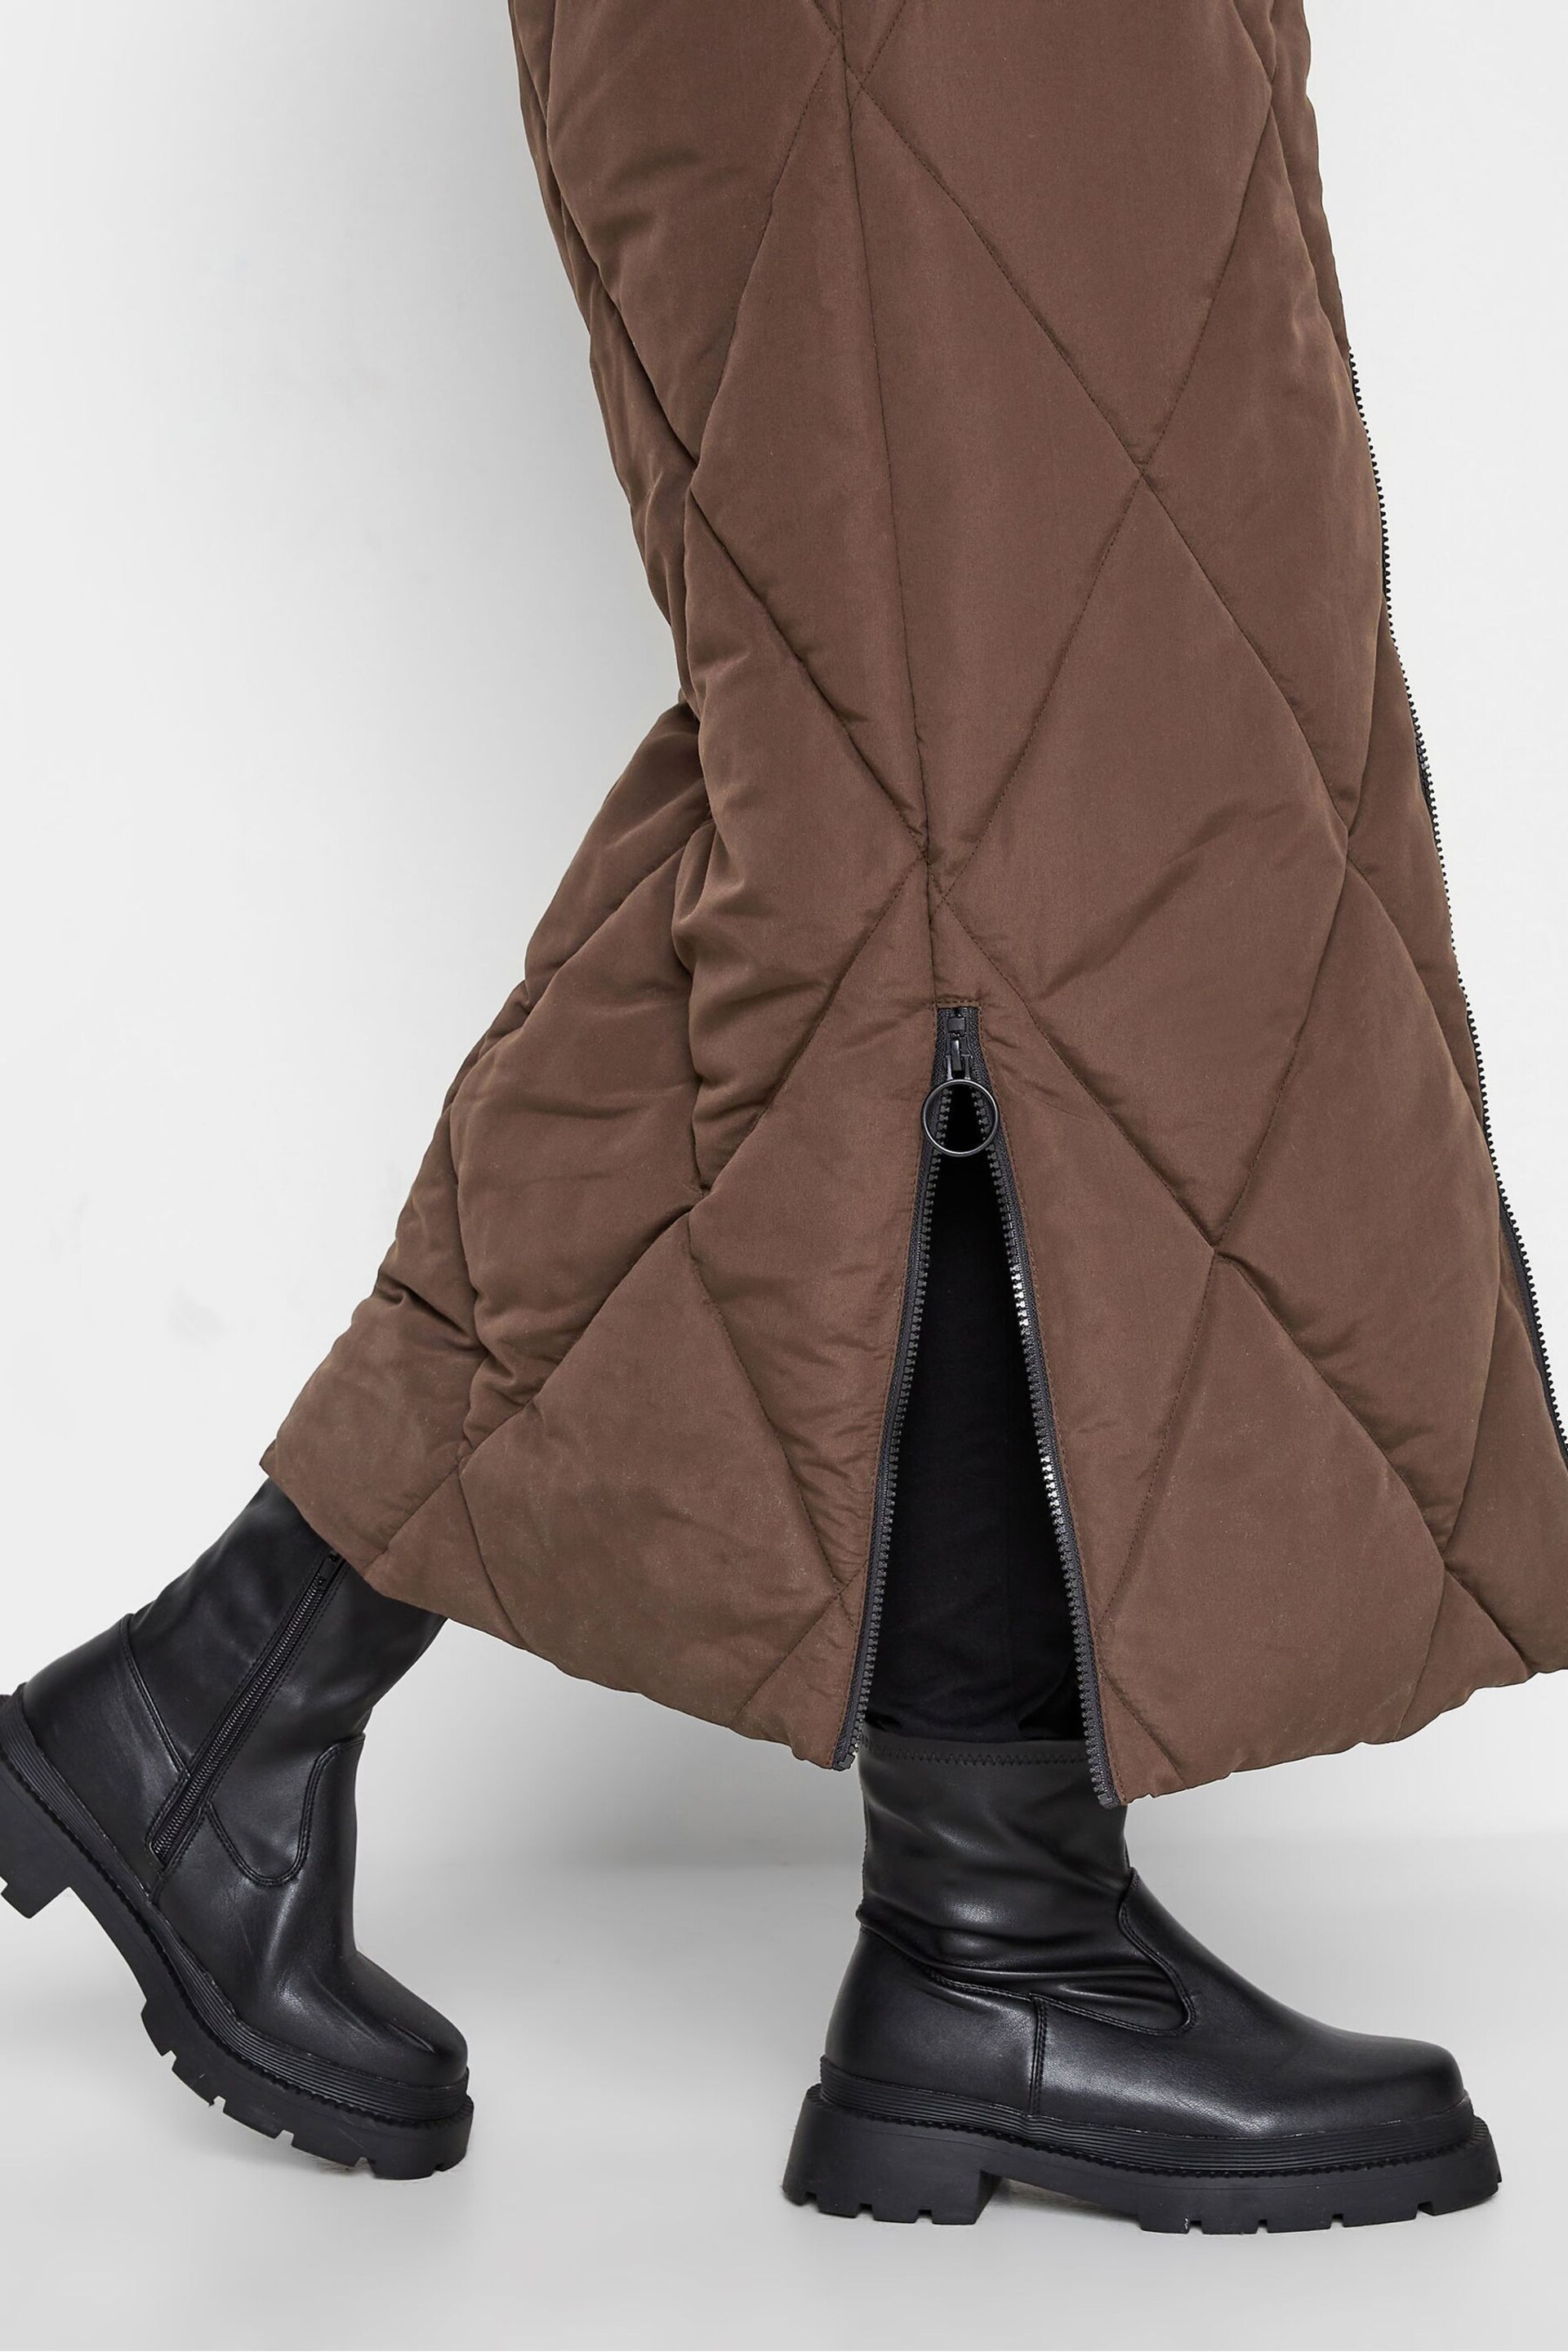 Long Tall Sally Brown Diamond Puffer Coat - Image 5 of 5